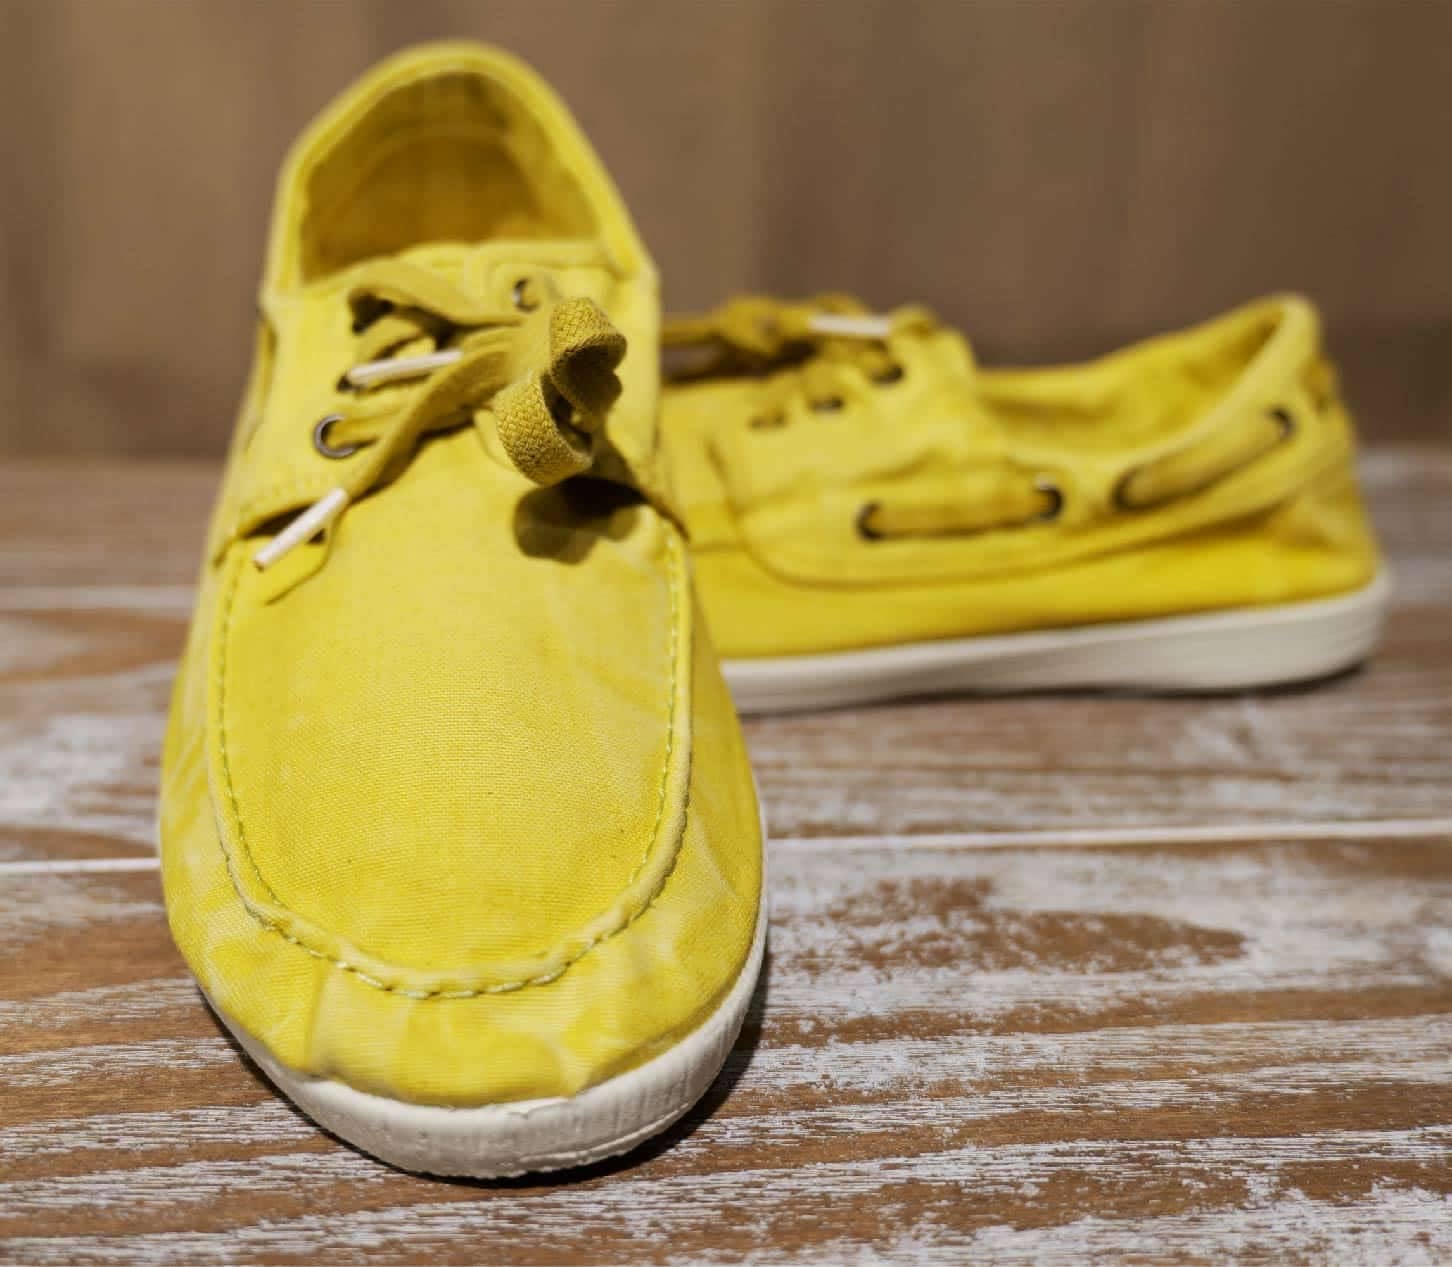 Chaussure bateau jaune face